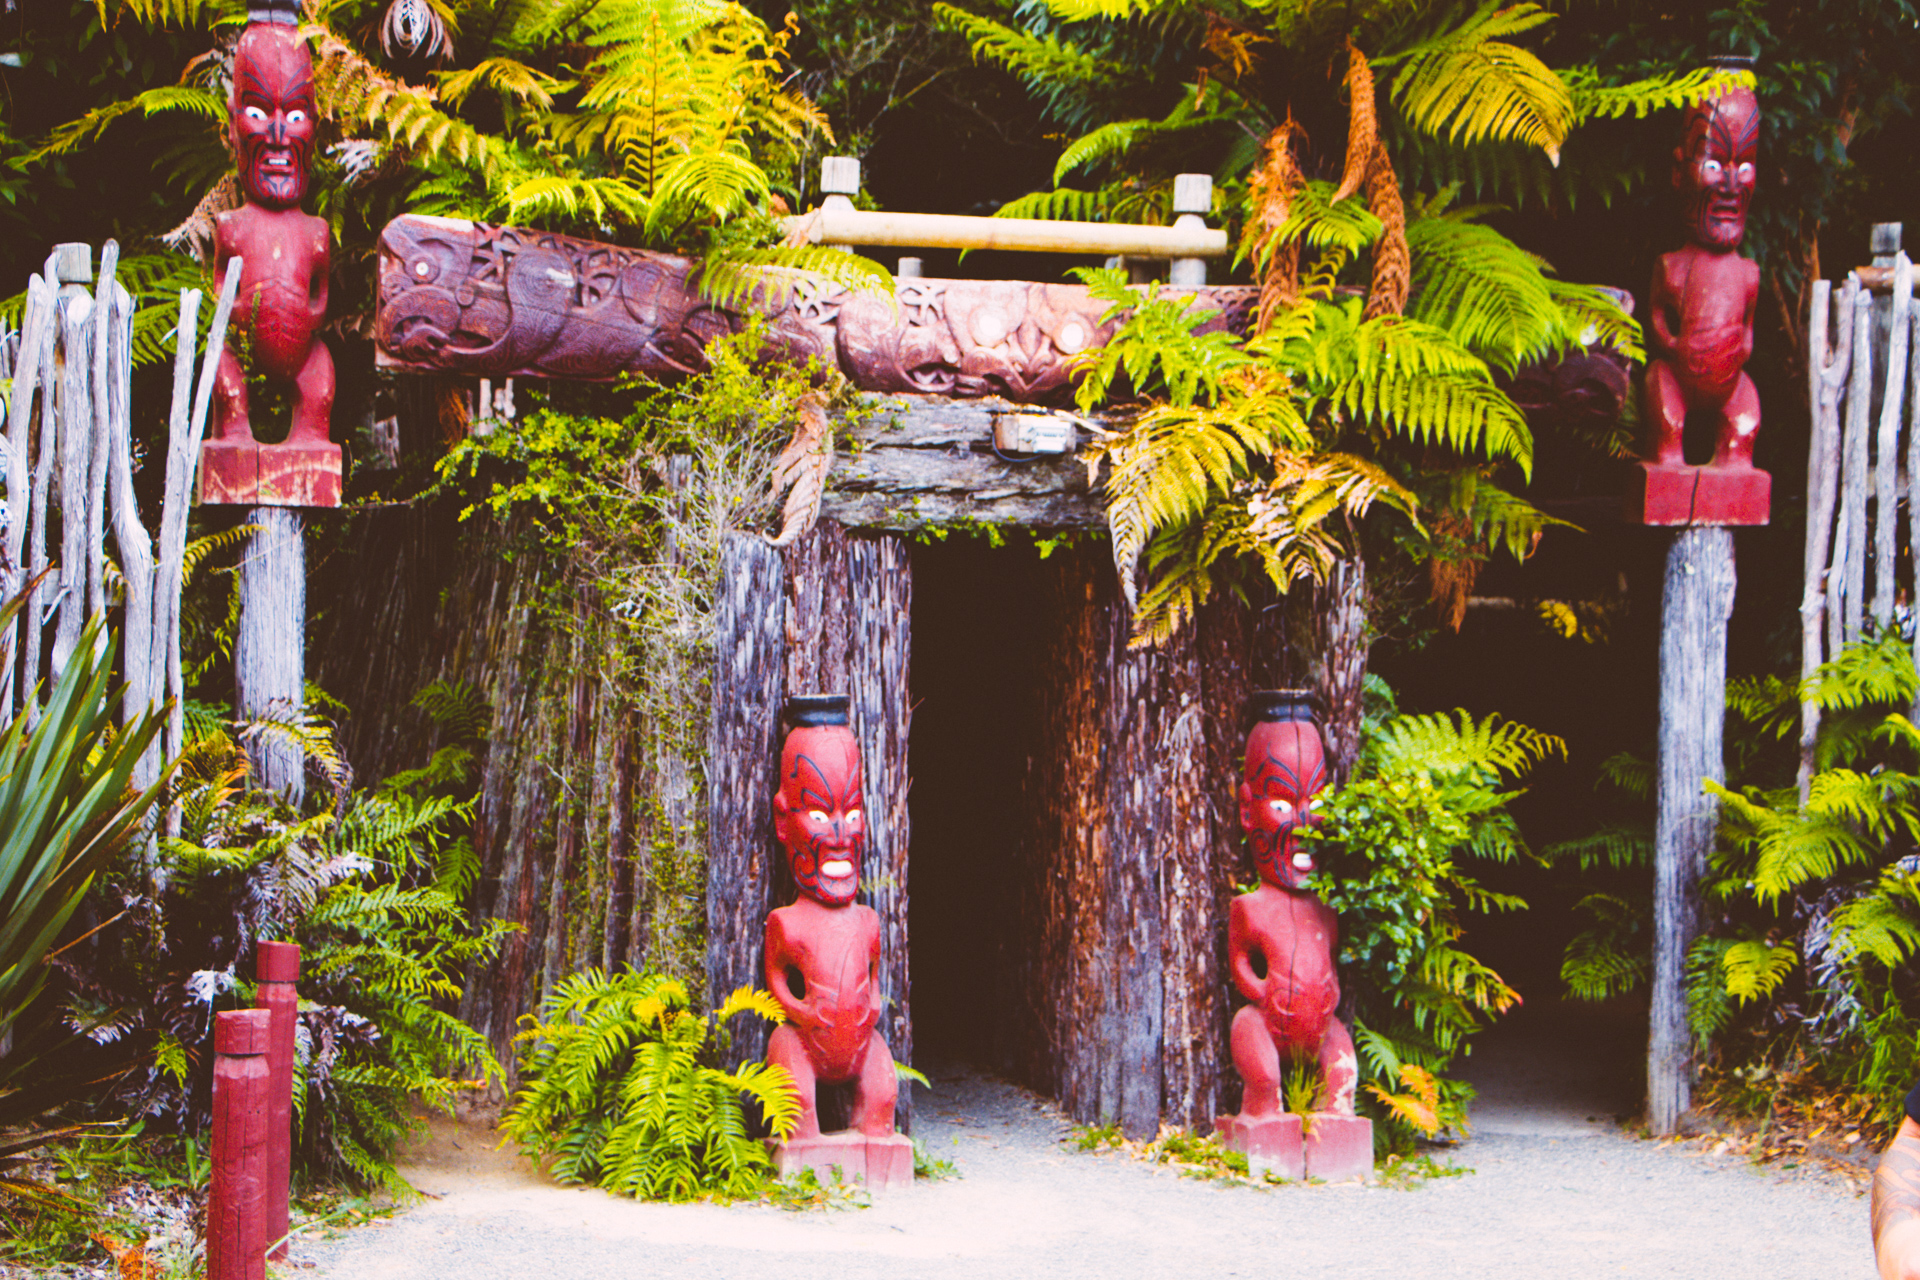 Tamaki Maori Village decorations